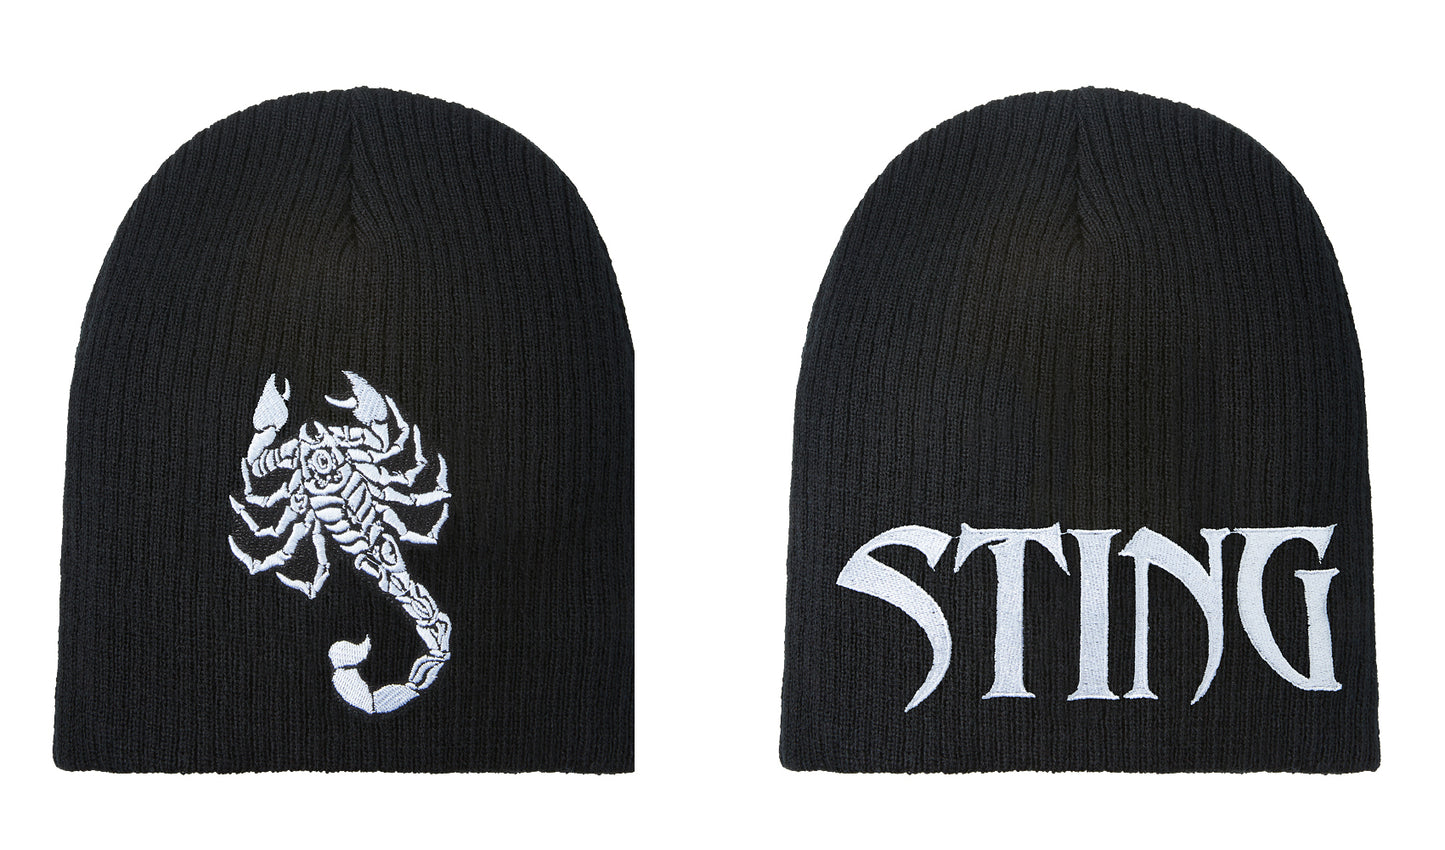 Sting Scorpion Knit Hat